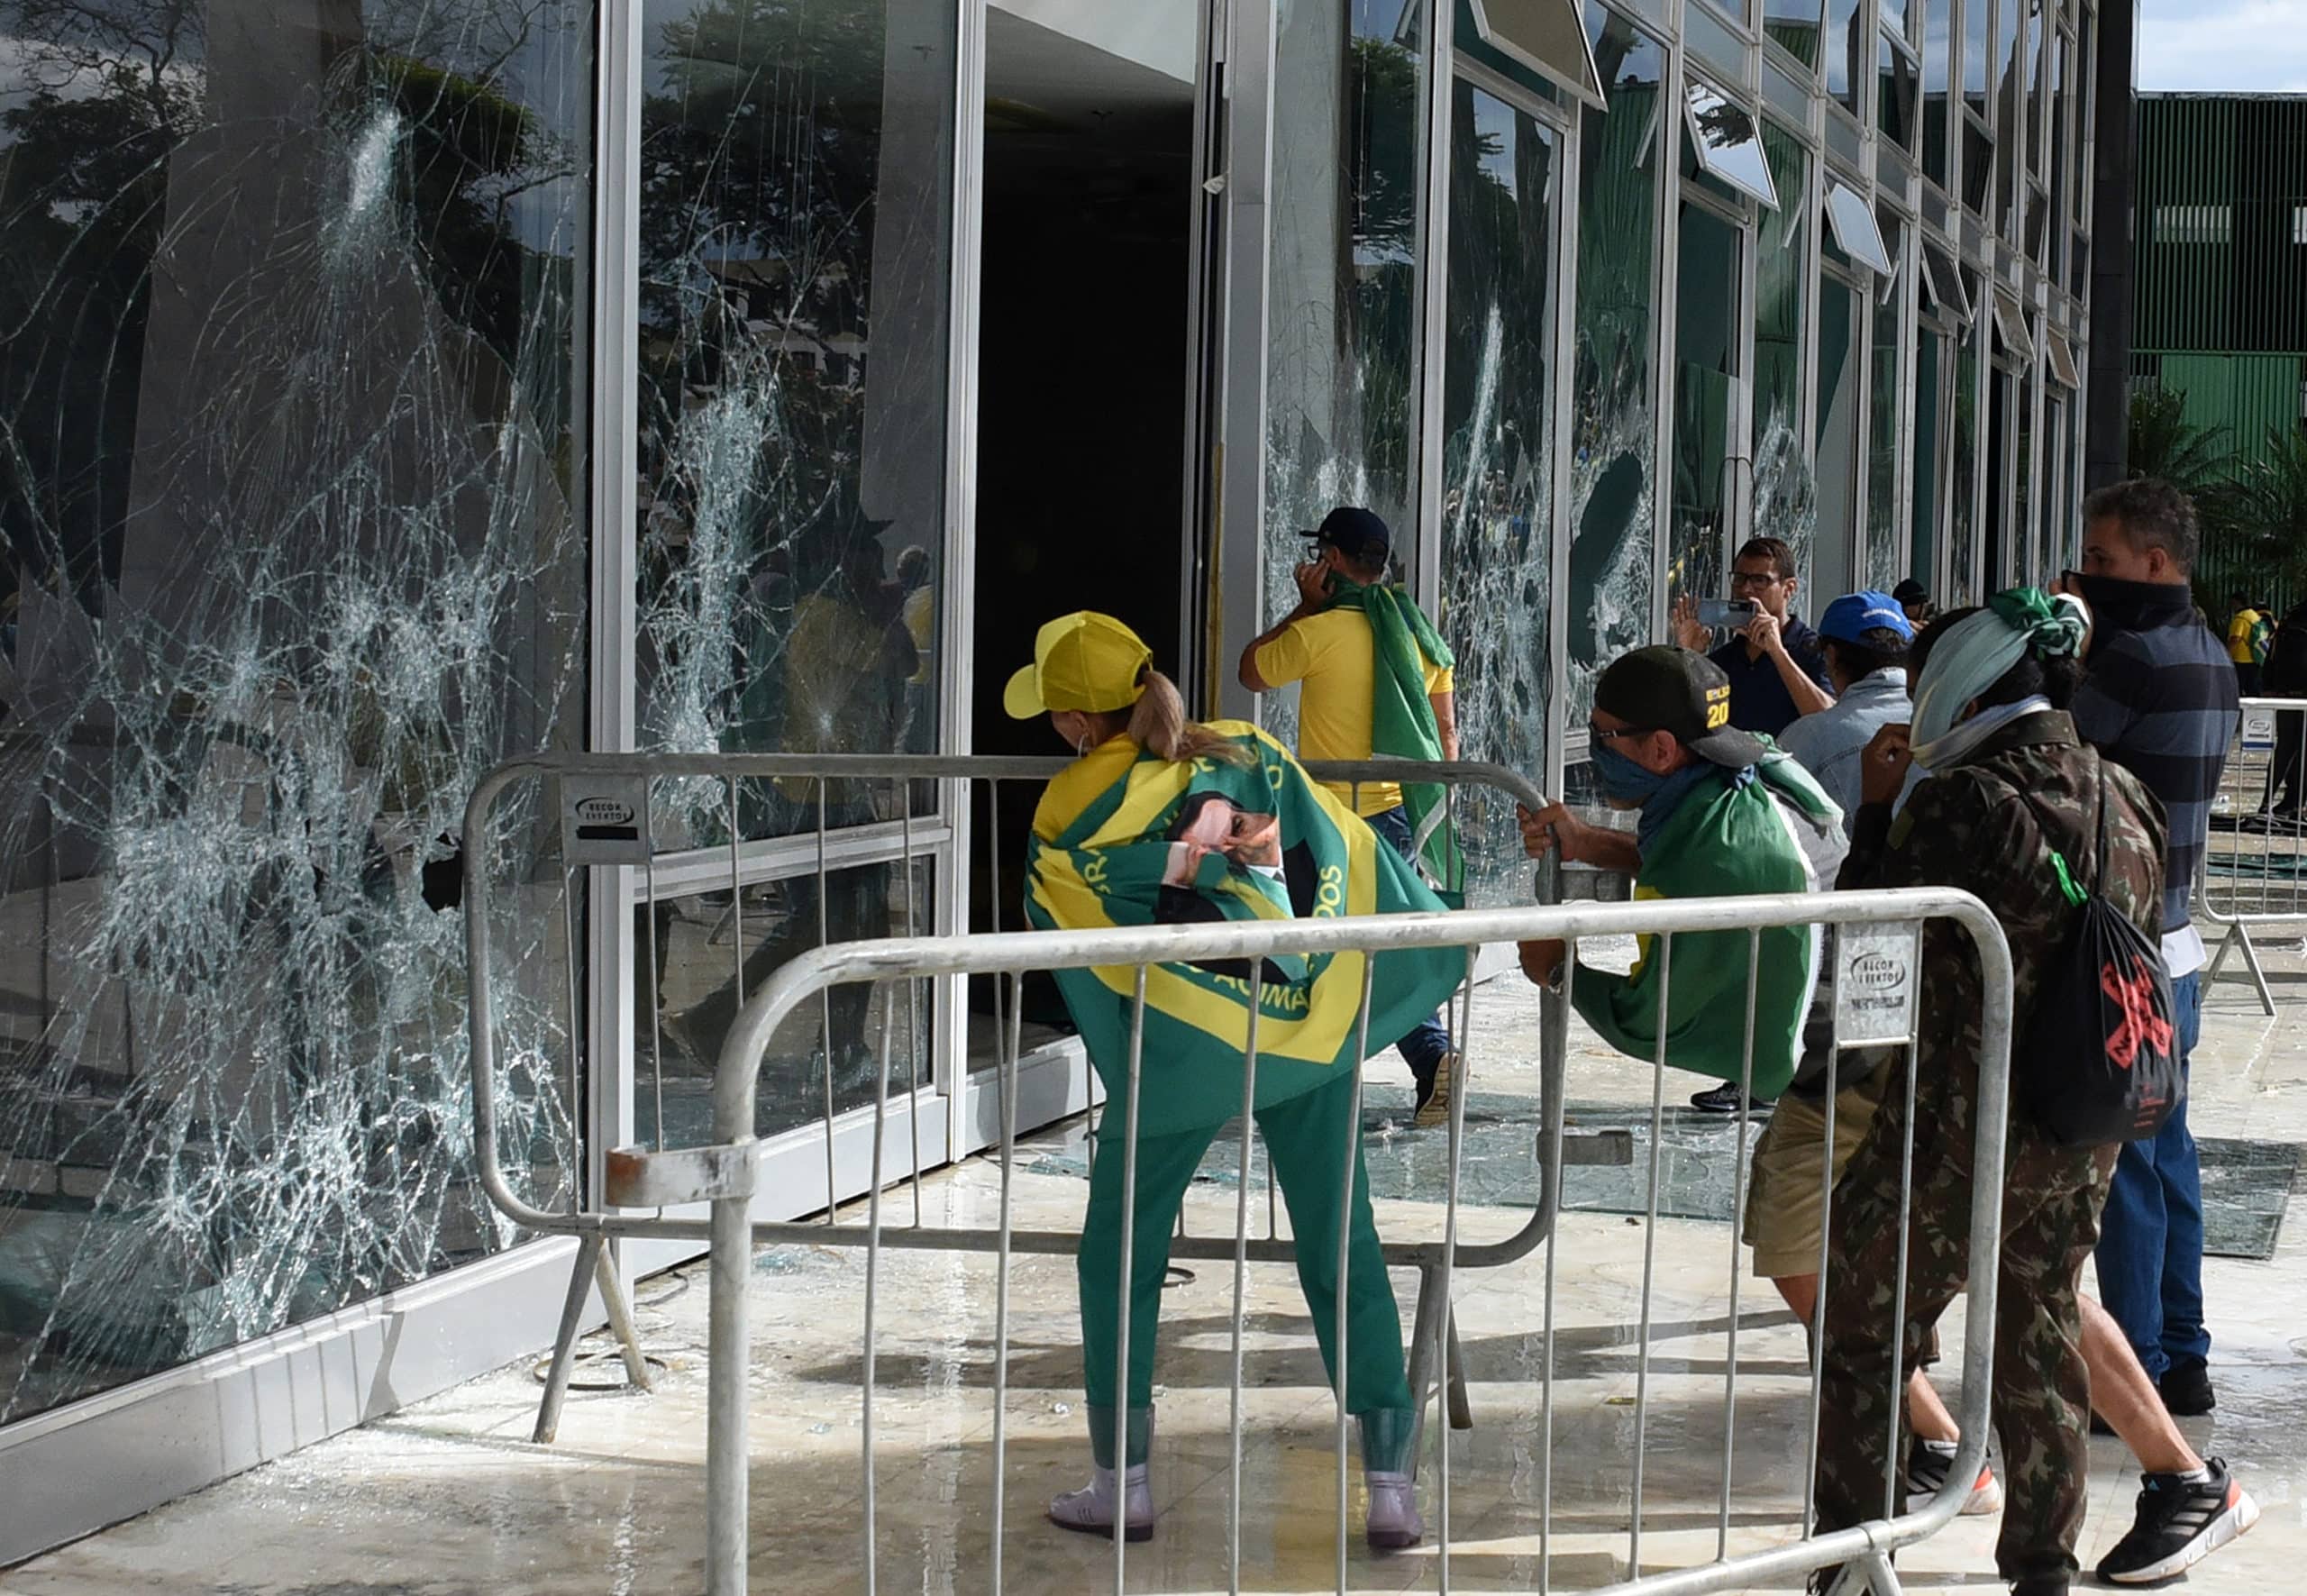 “¡Estuve allí!”: souvenirs de toma de los poderes por bolsonaristas se venden en Brasil